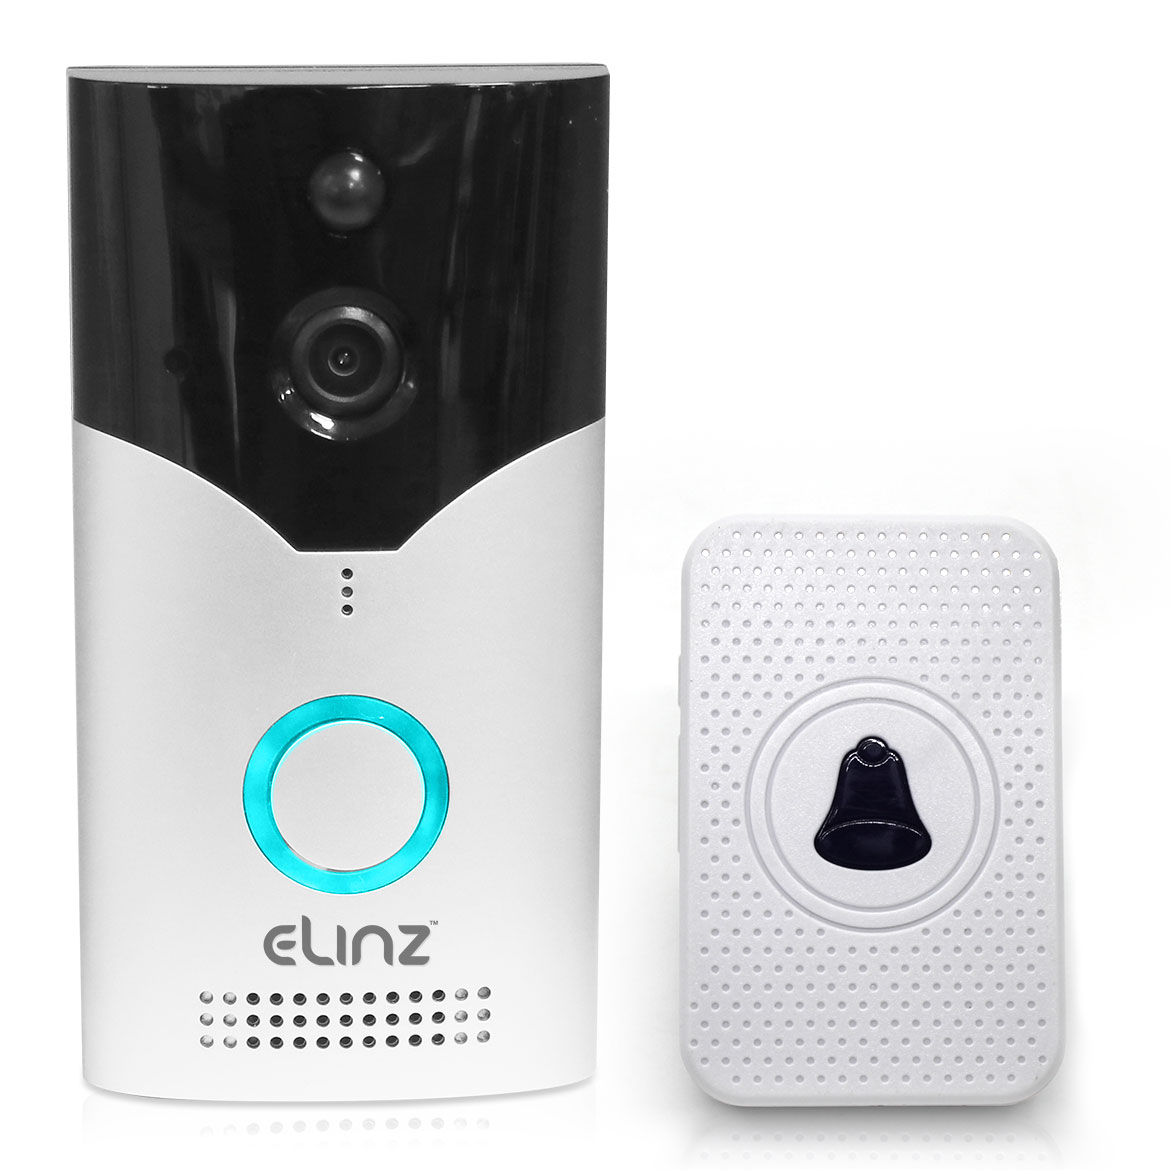 Elinz Wireless WiFi Doorbell Intercom Security Camera HD 1080P Two-Way Talk